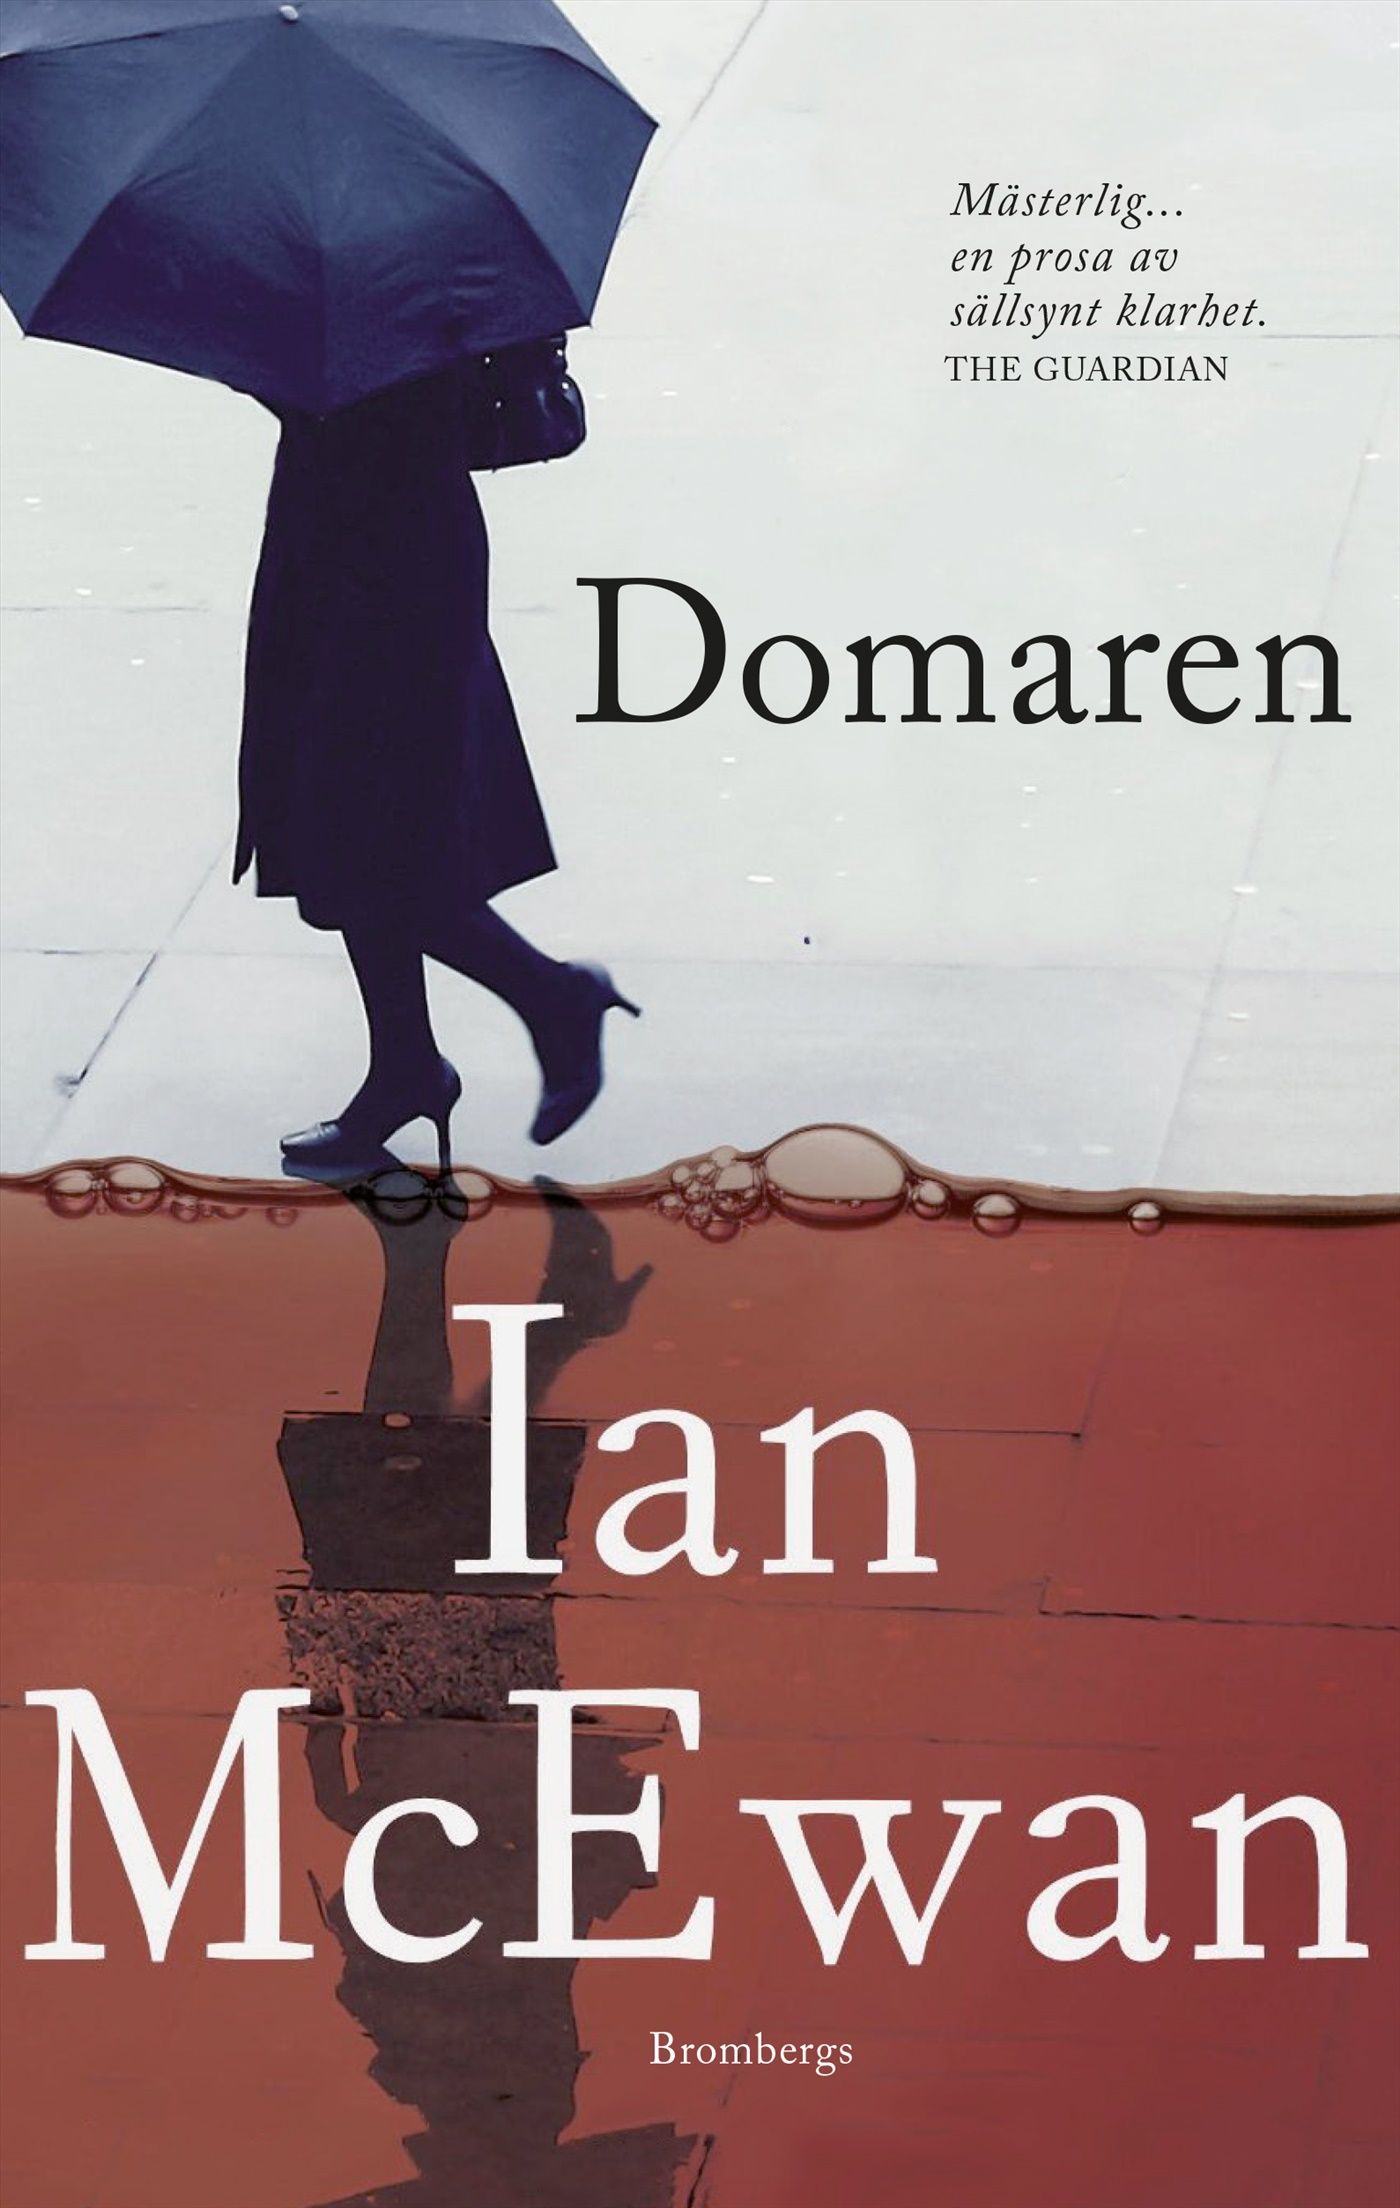 Domaren, audiobook by Ian McEwan